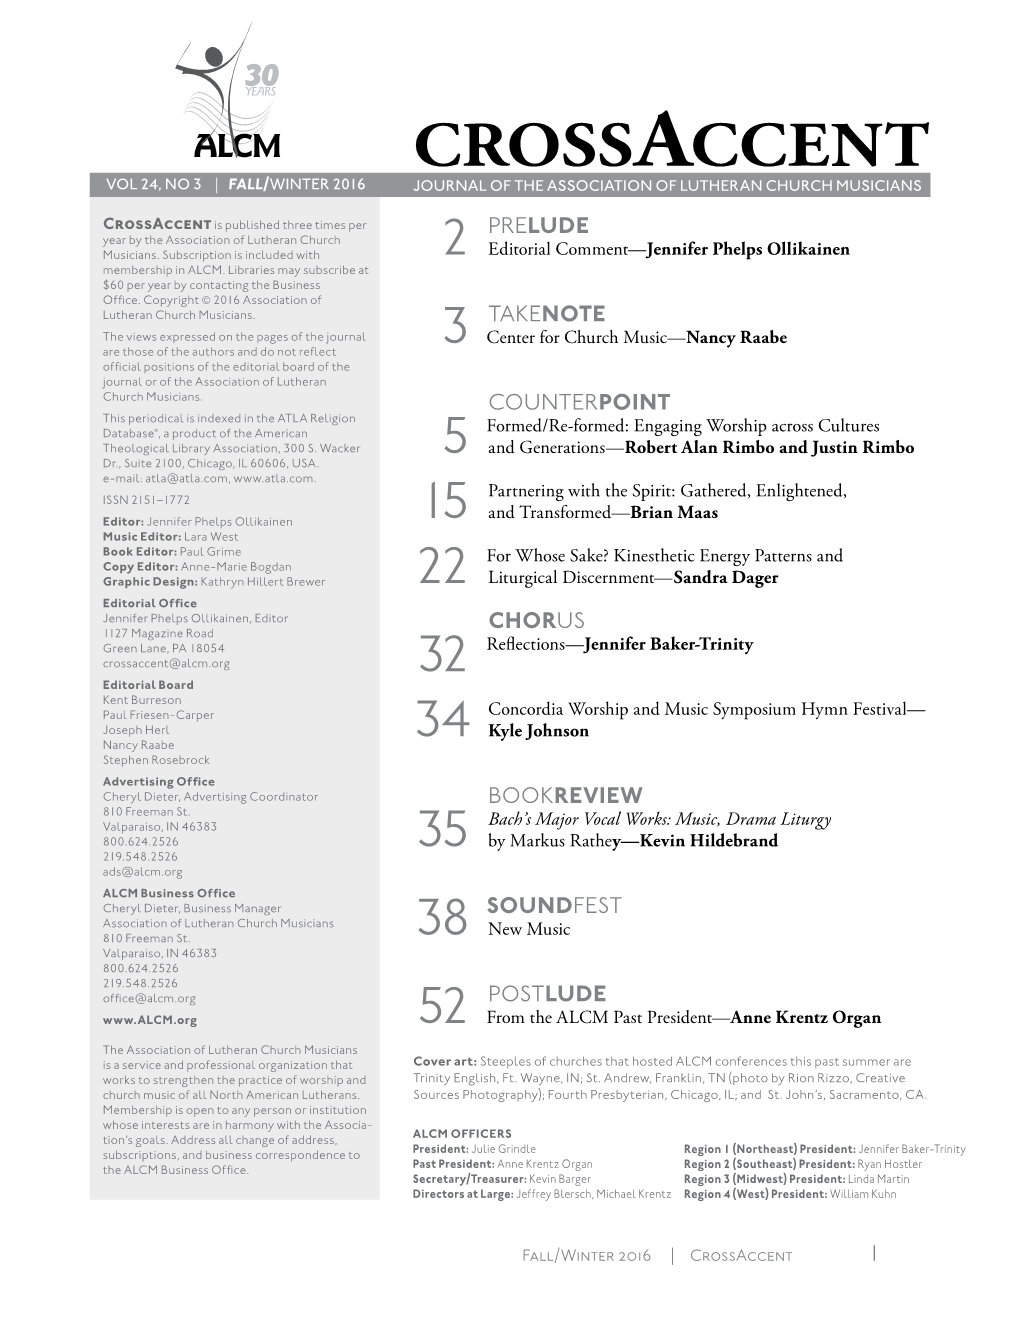 CROSSACCENT Vol 24, No 3 | FALL/WINTER 2016 Journal of the Association of Lutheran Church Musicians